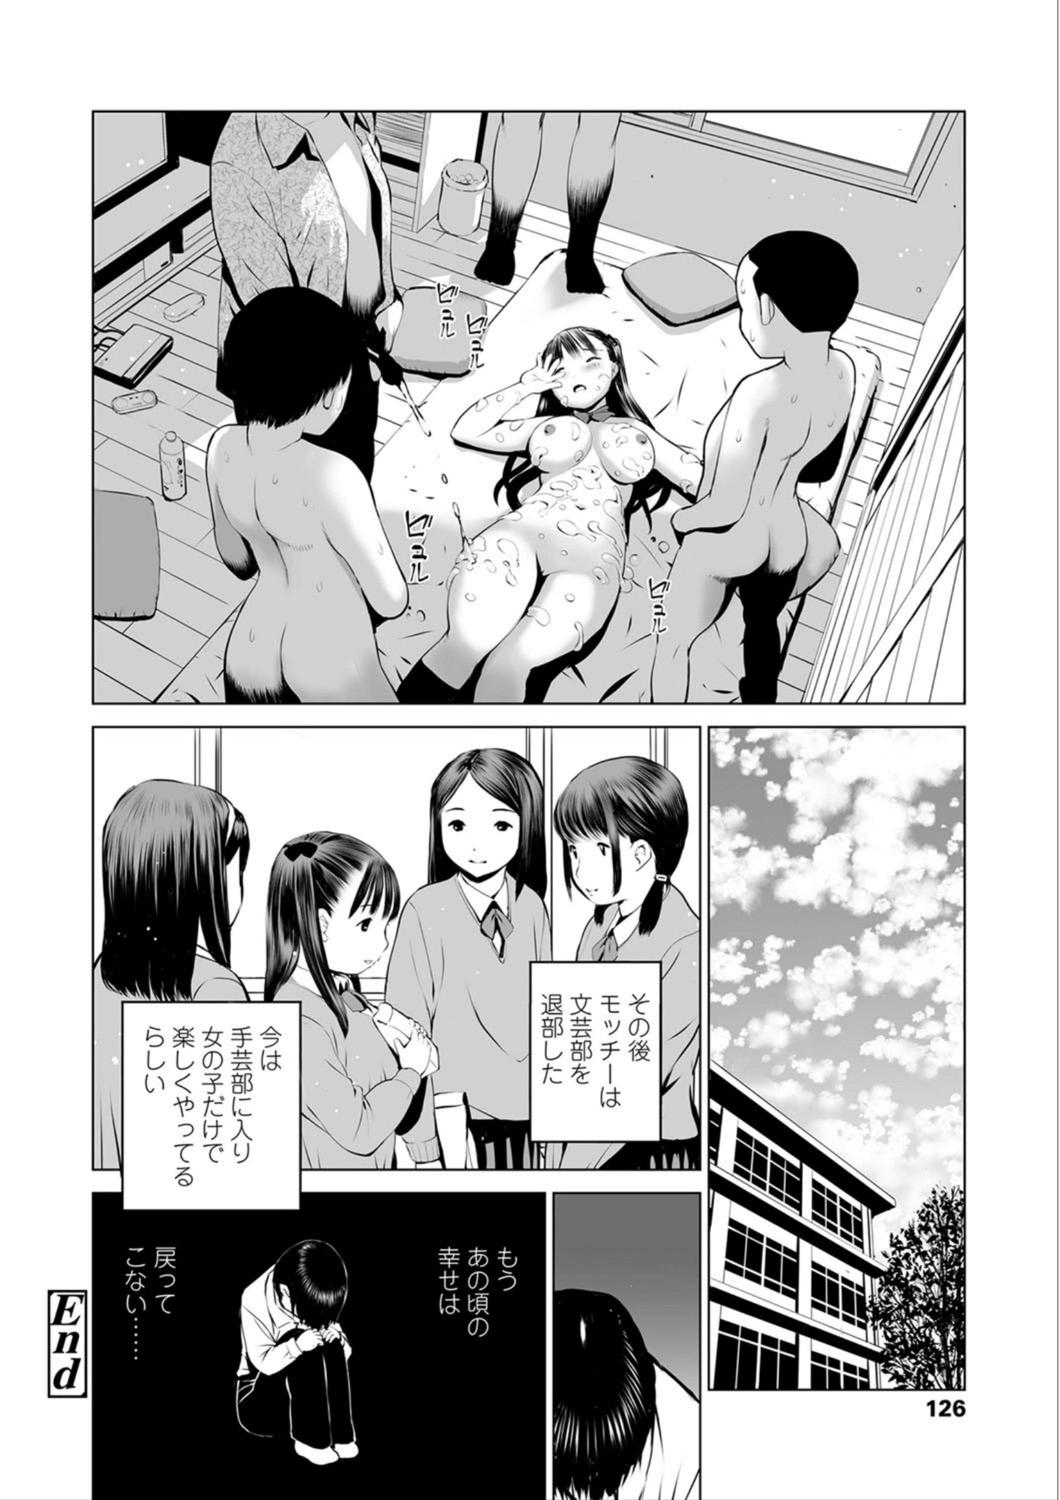 Kounai Baishun - In school prostitution 127